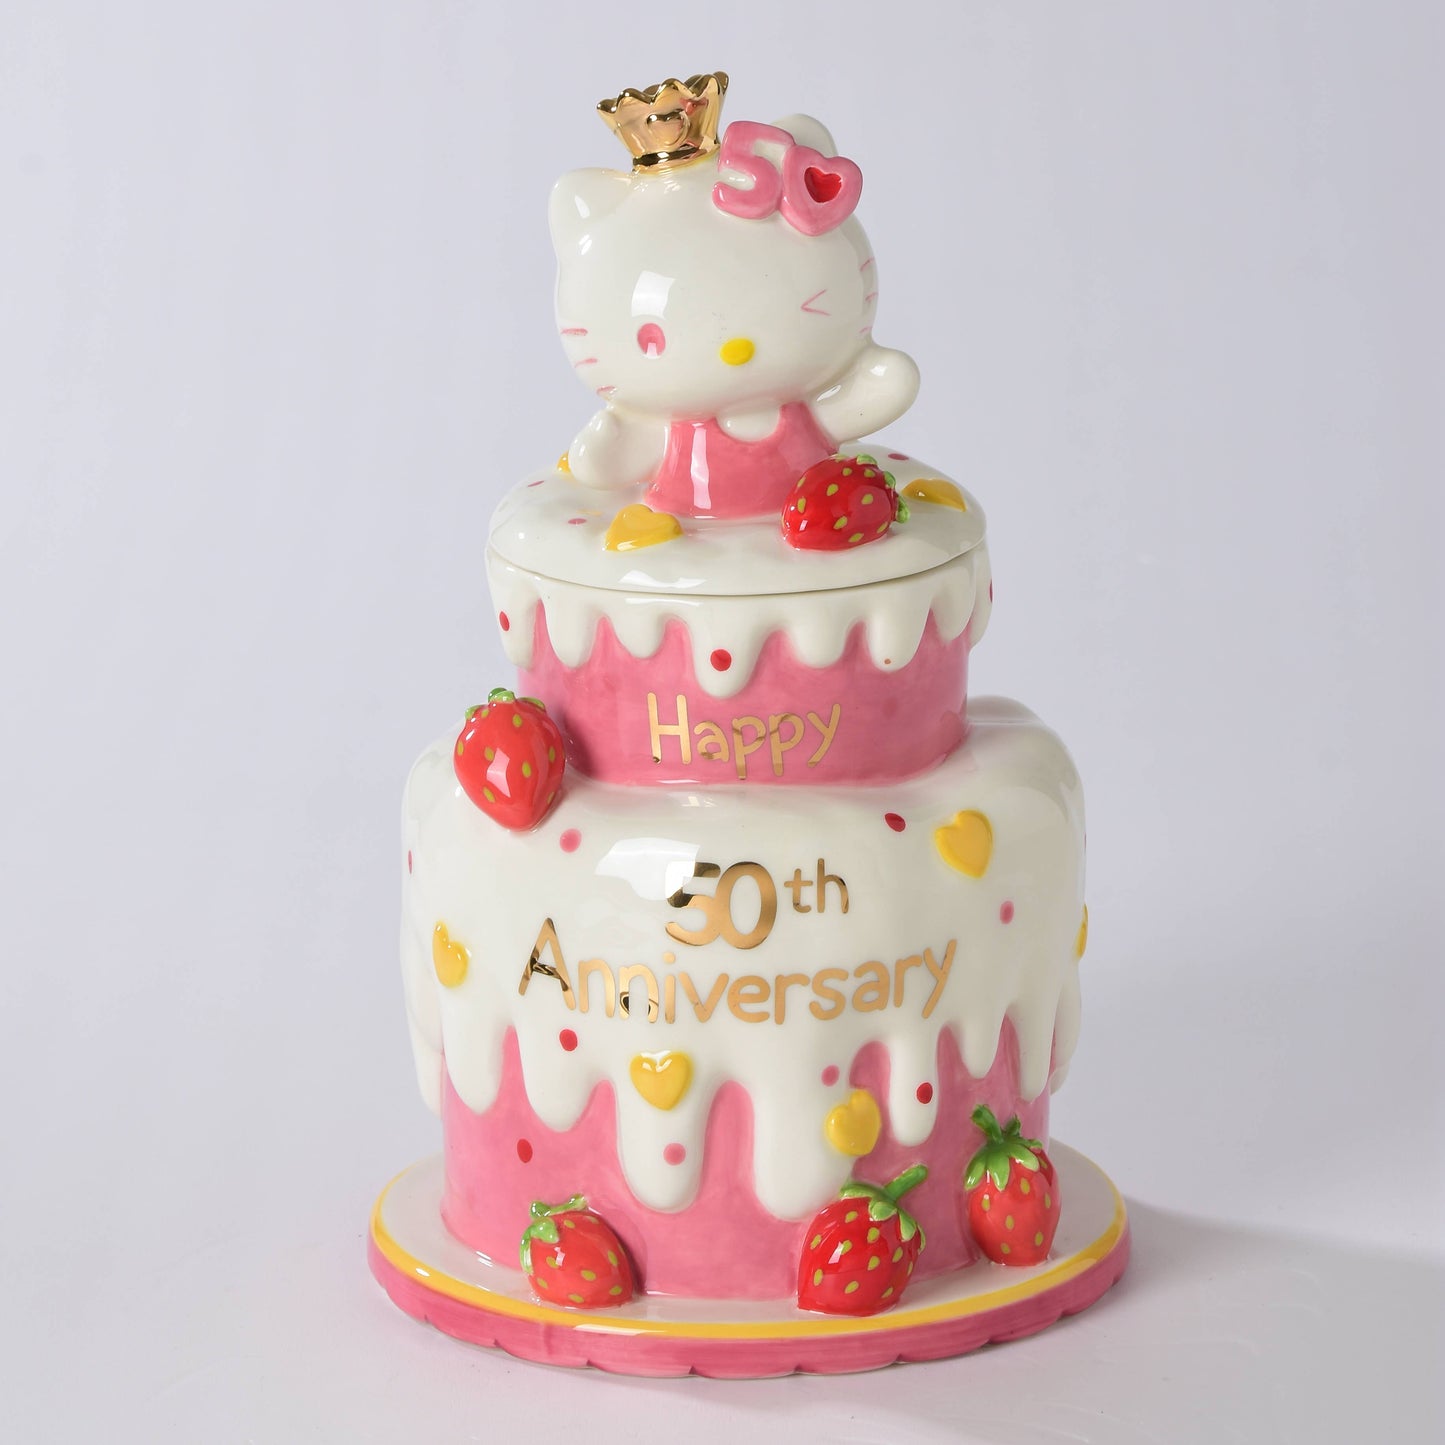 HELLO KITTY 50TH ANNIVERSARY CAKE COOKIE JAR